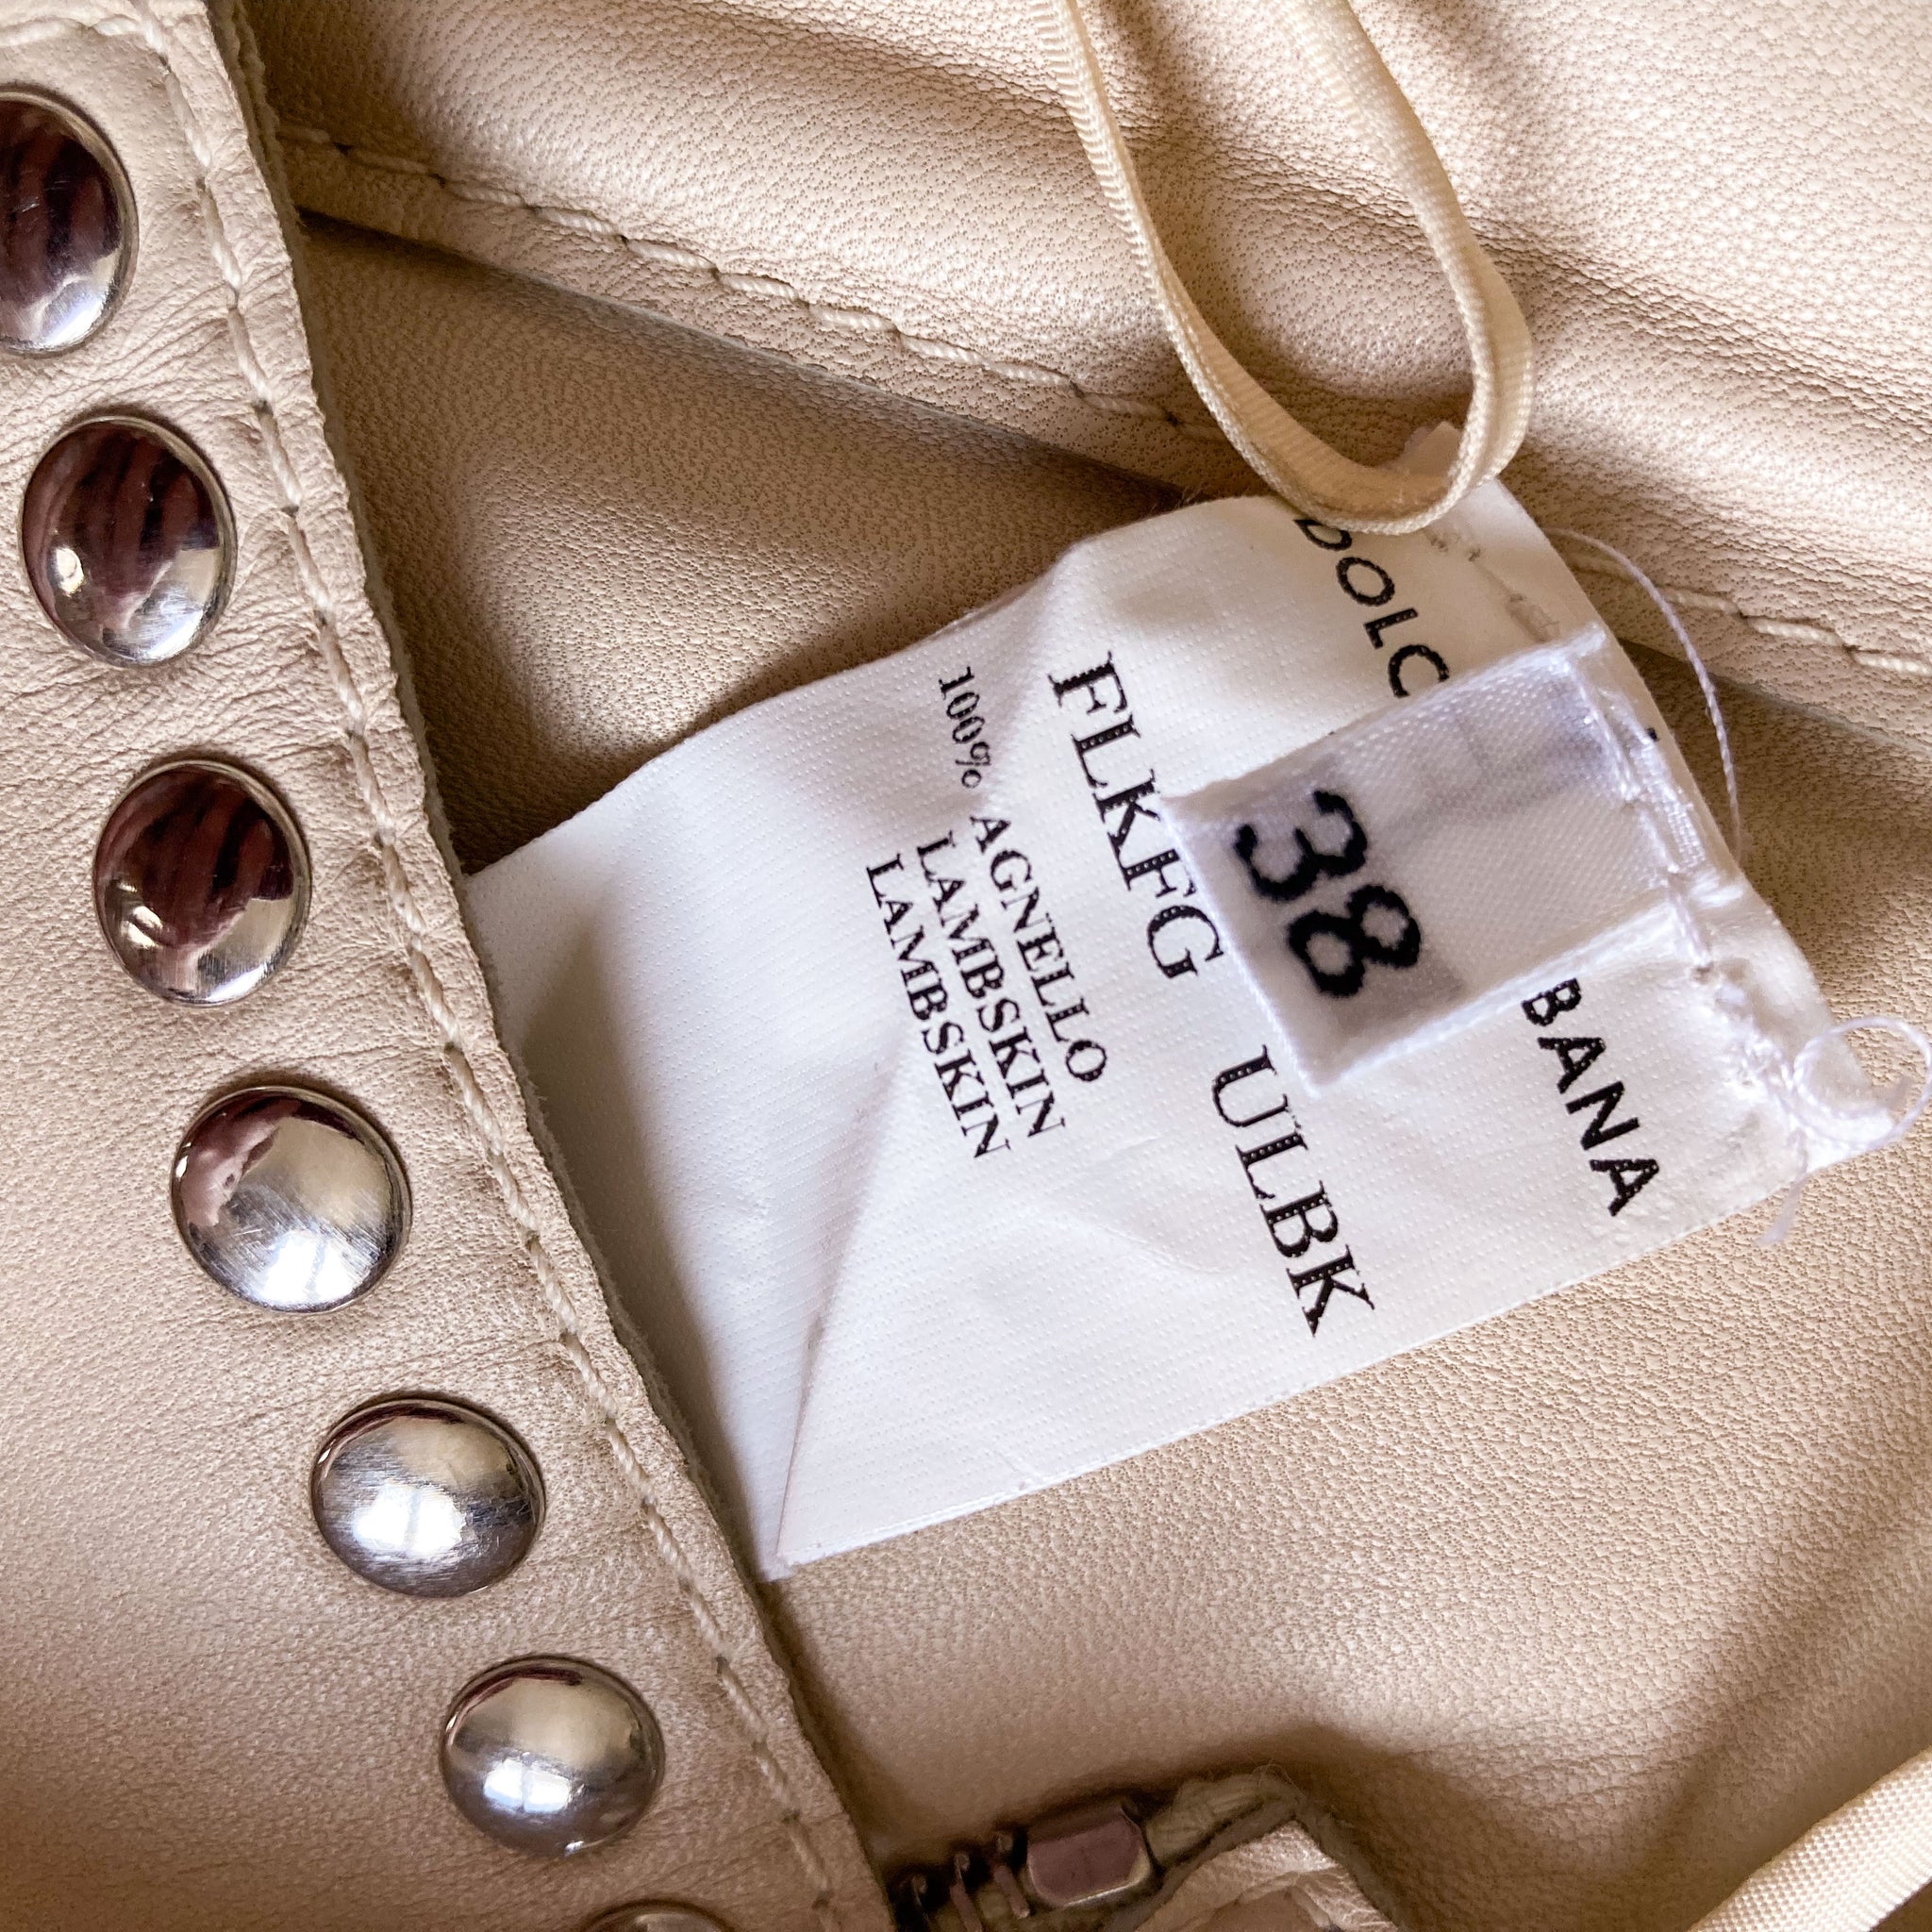 Dolce & Gabbana S/S 2003 iconic studded leather skirt + belt